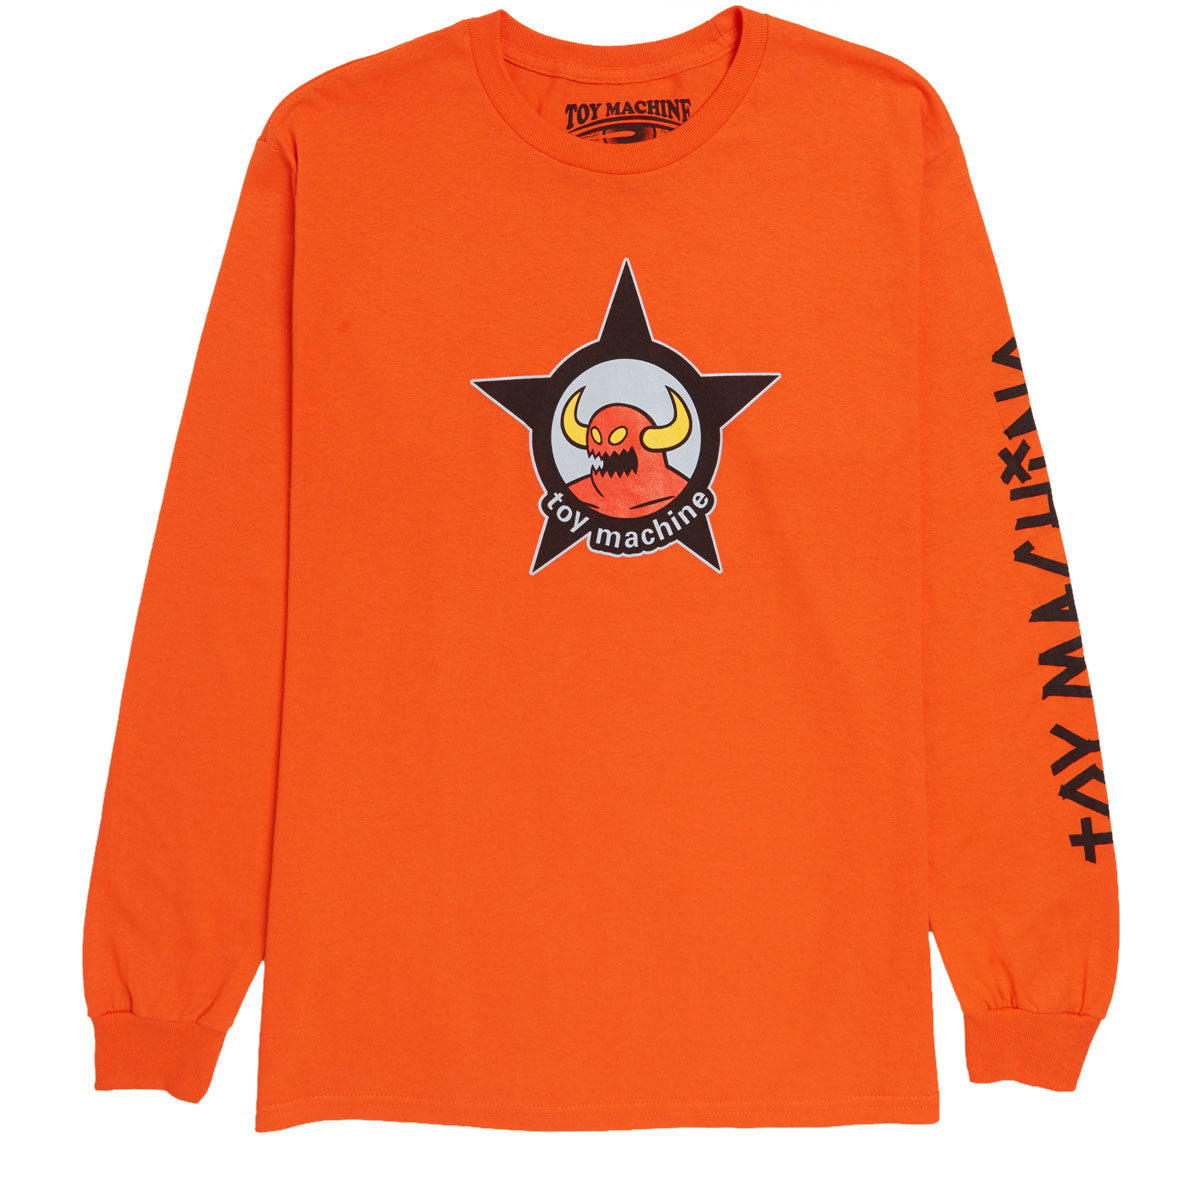 Toy Machine Mon-star Long Sleeve T-Shirt - Orange image 1